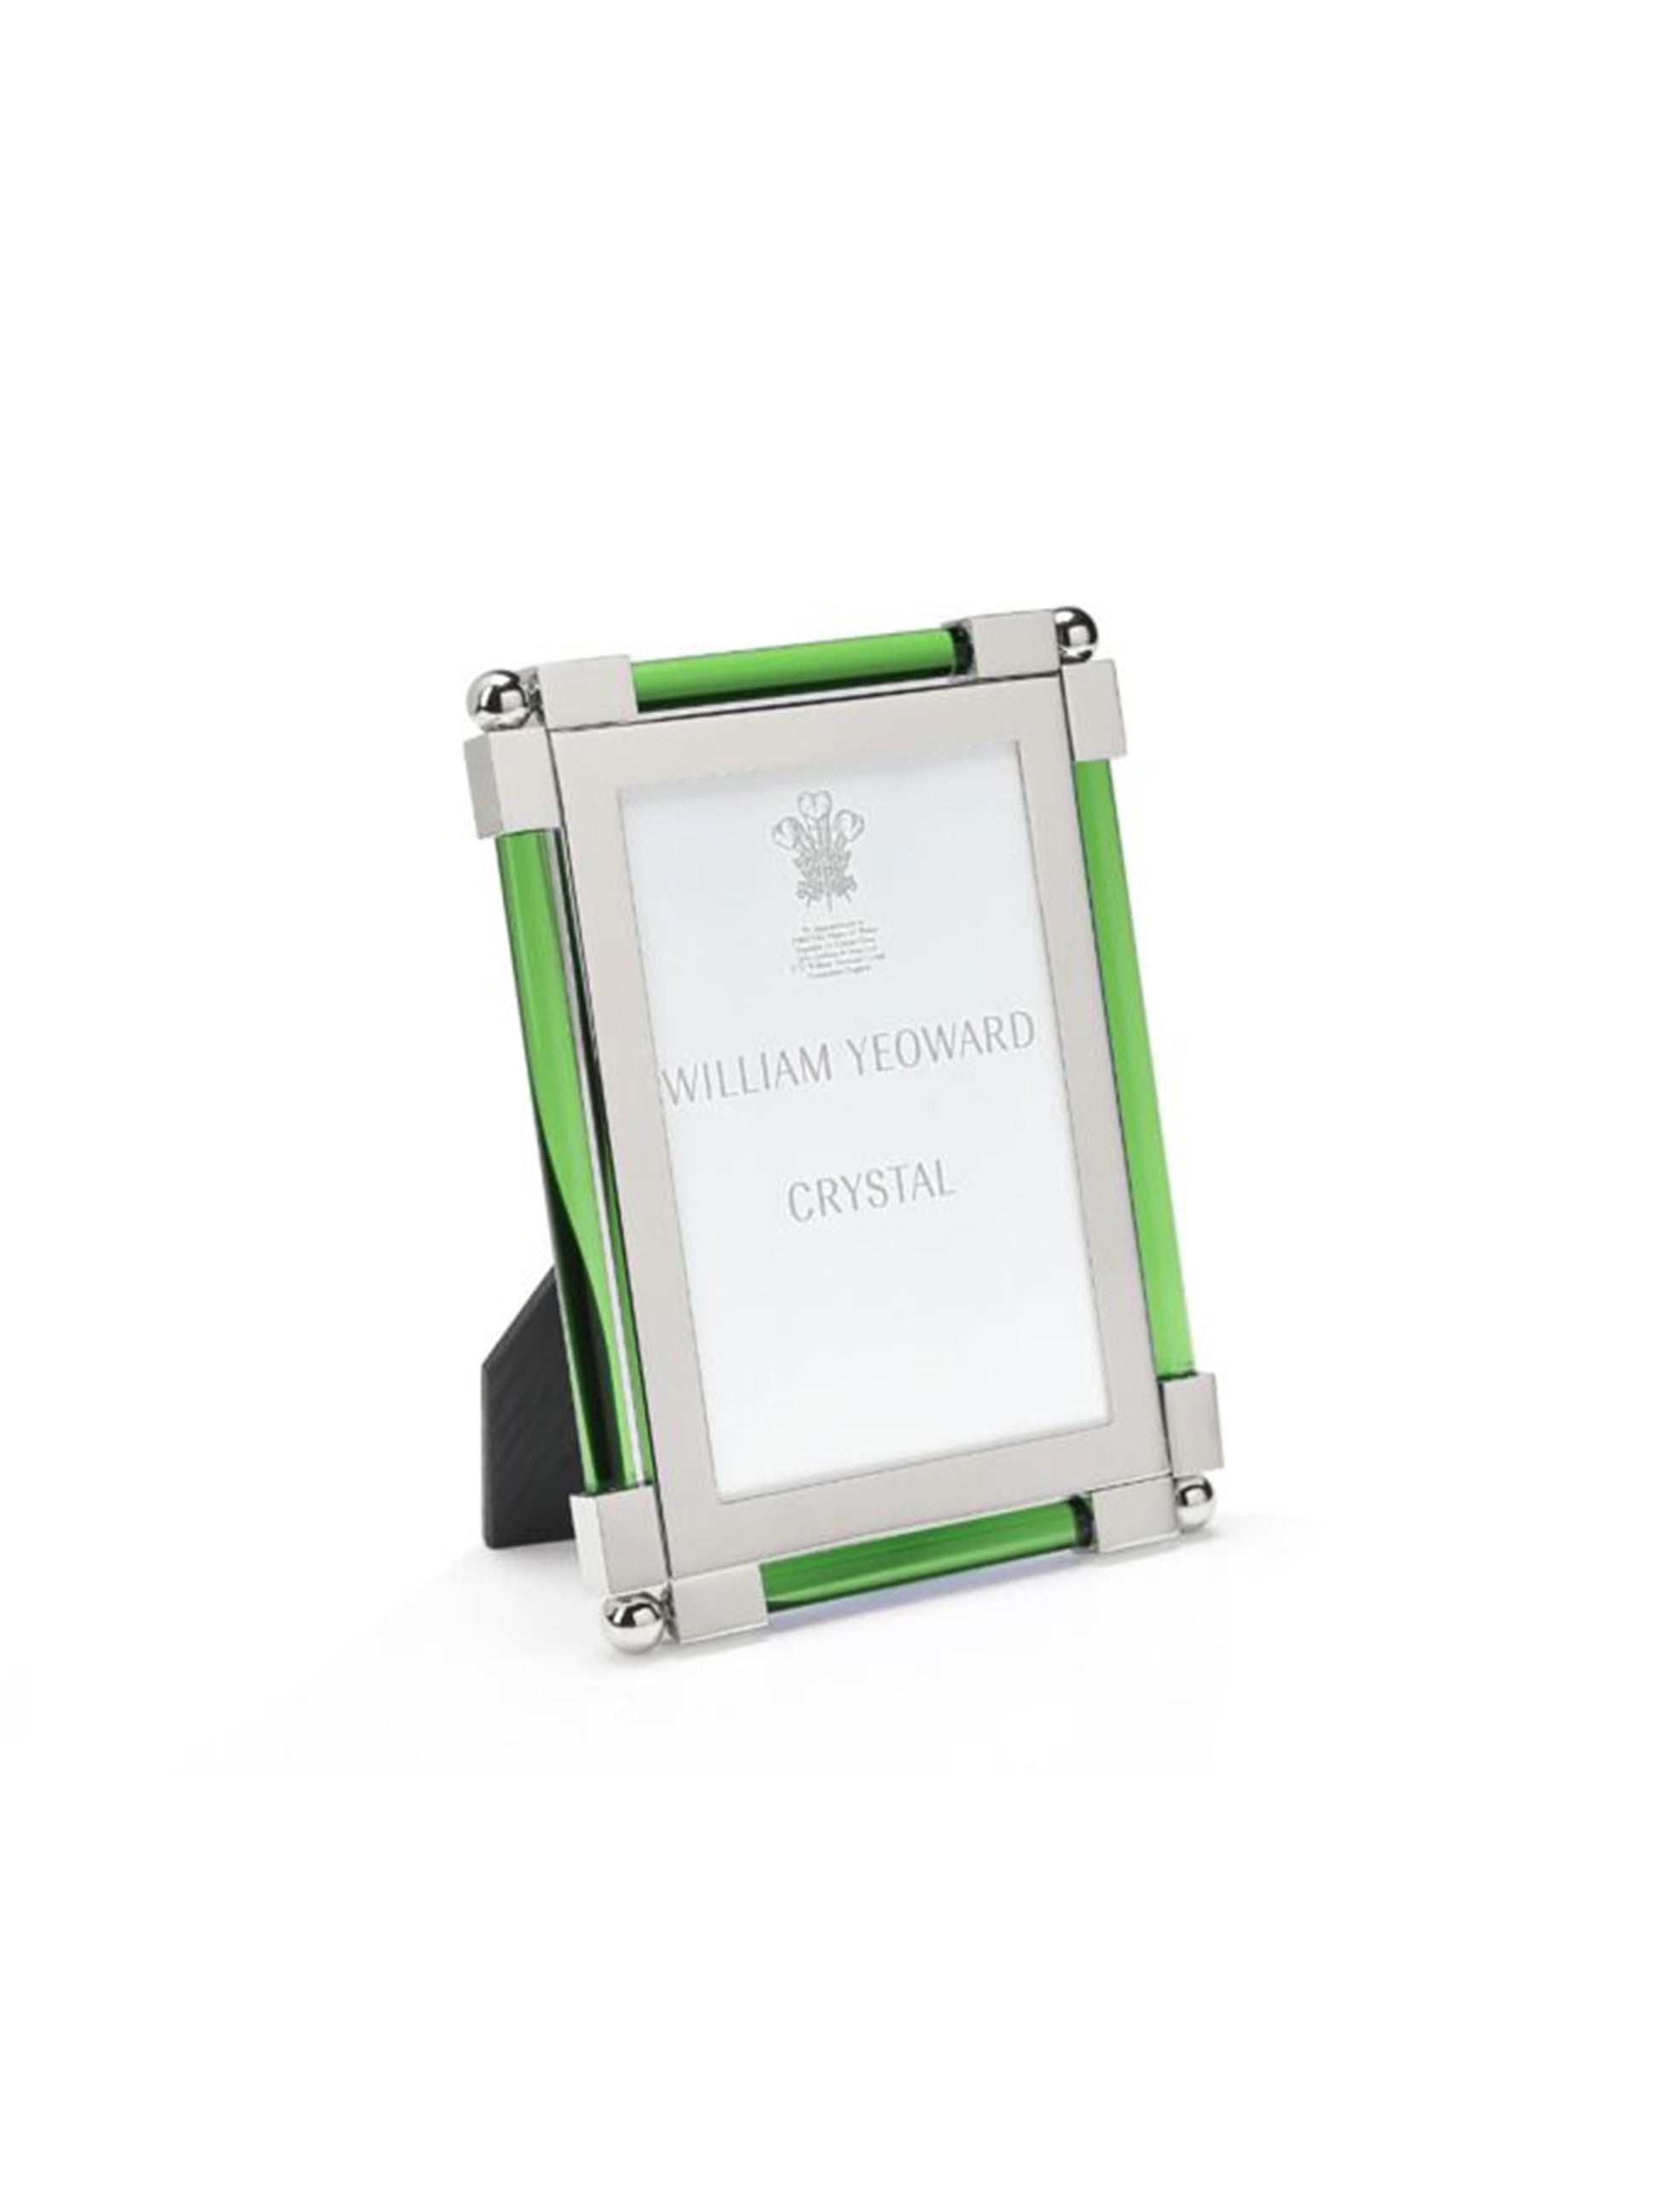 William Yeoward Crystal Classic Green Photo Frame 4 x 6 Weston Table